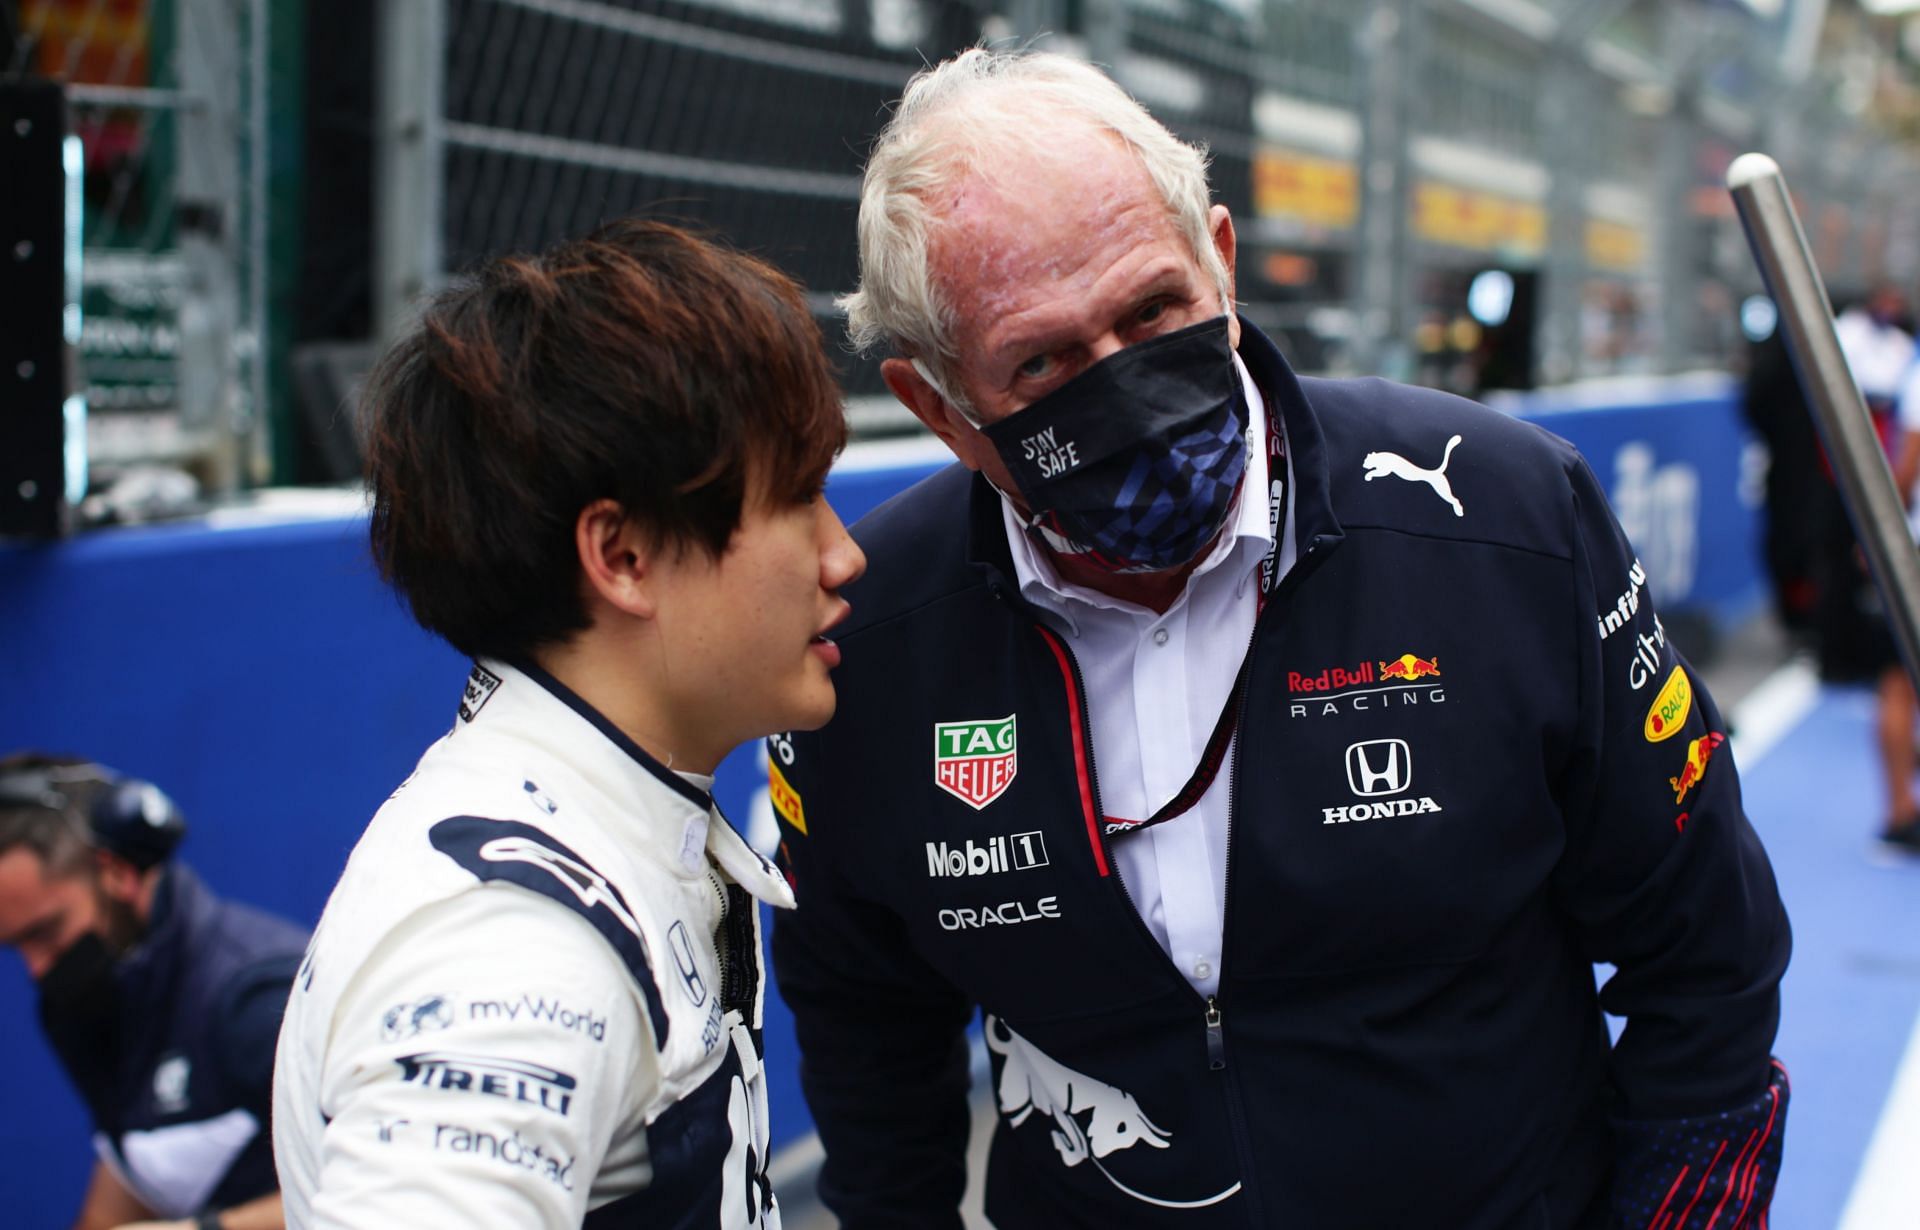 Yuki Tsunoda (left) and Helmut Marko (right) ahead of the 2021 Russian Grand Prix